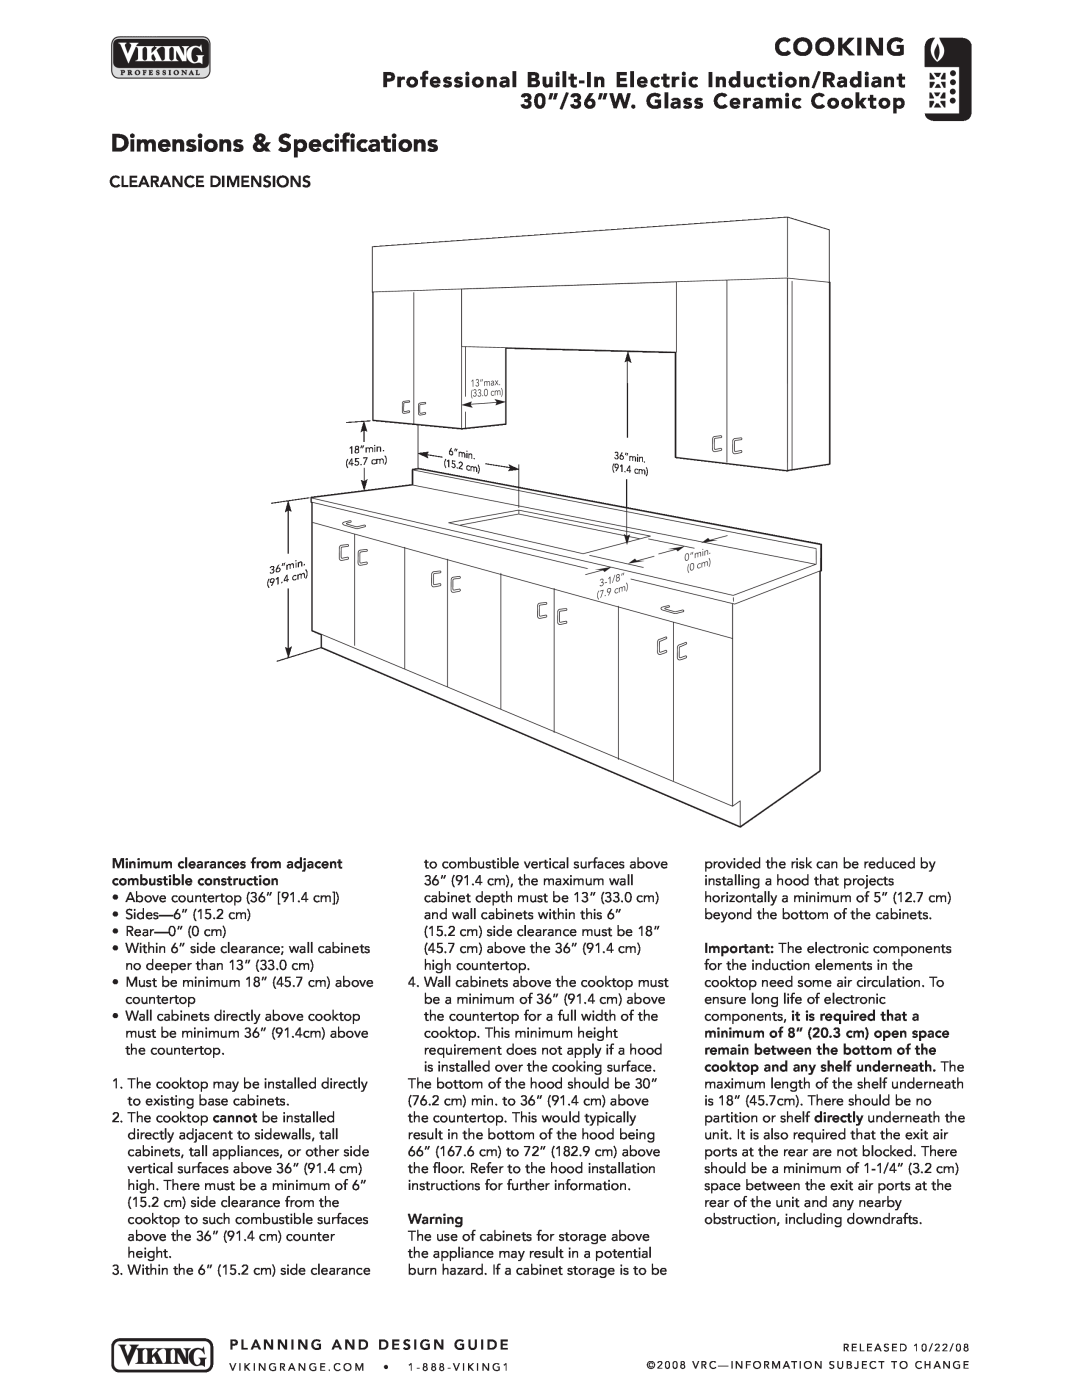 Viking VCCU106-4B, VCCU166-6B manual Cooking, Dimensions & Specifications, Clearance Dimensions 